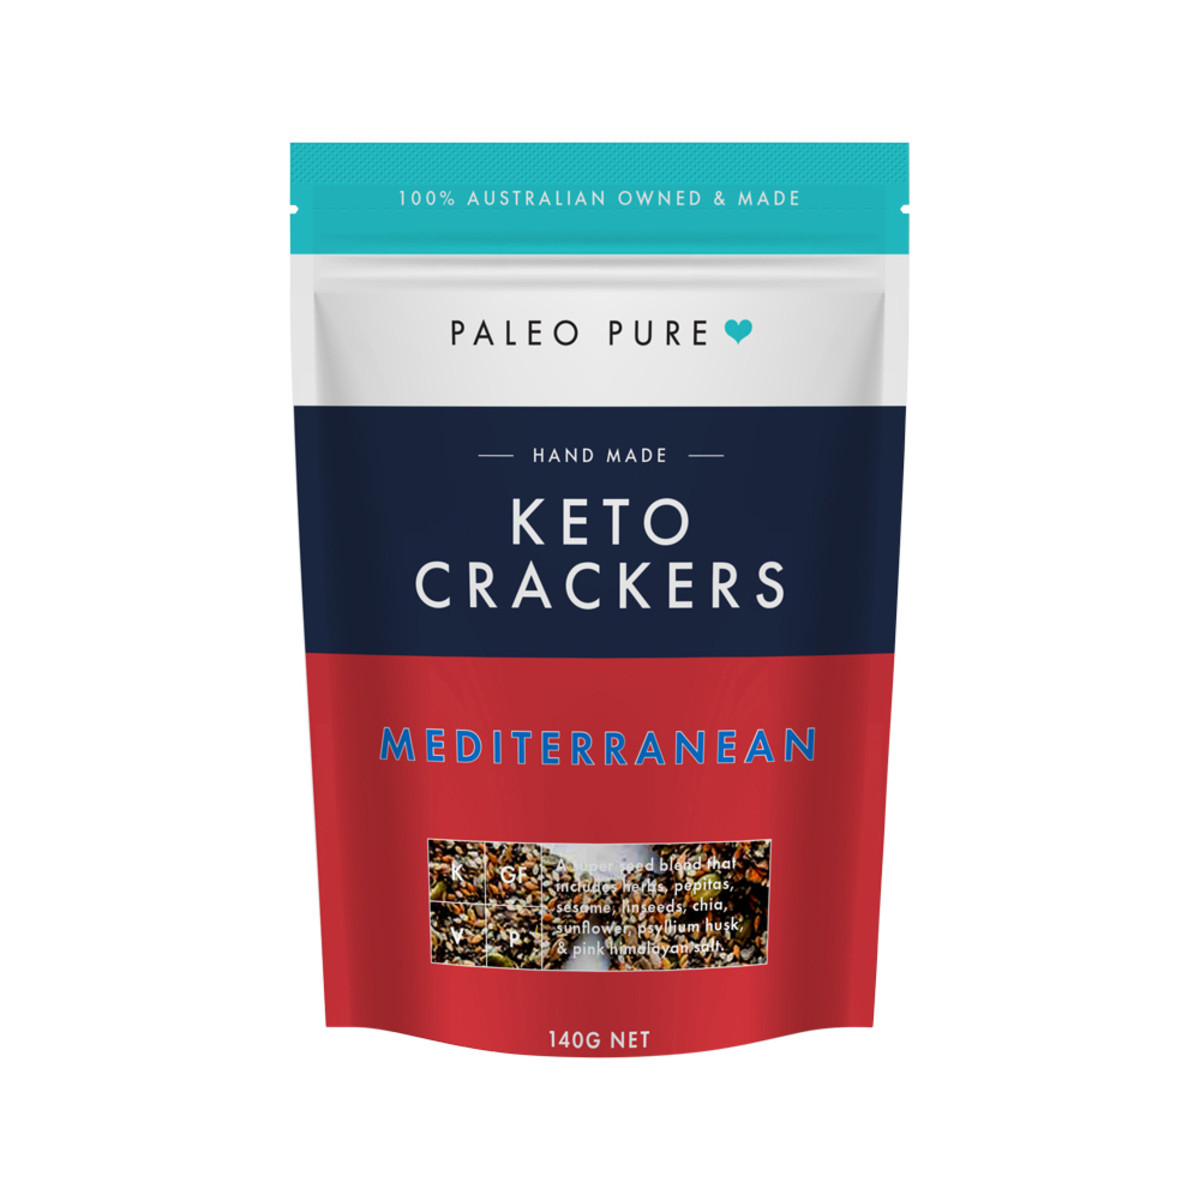 PALEO PURE - Keto Crackers Mediterranean